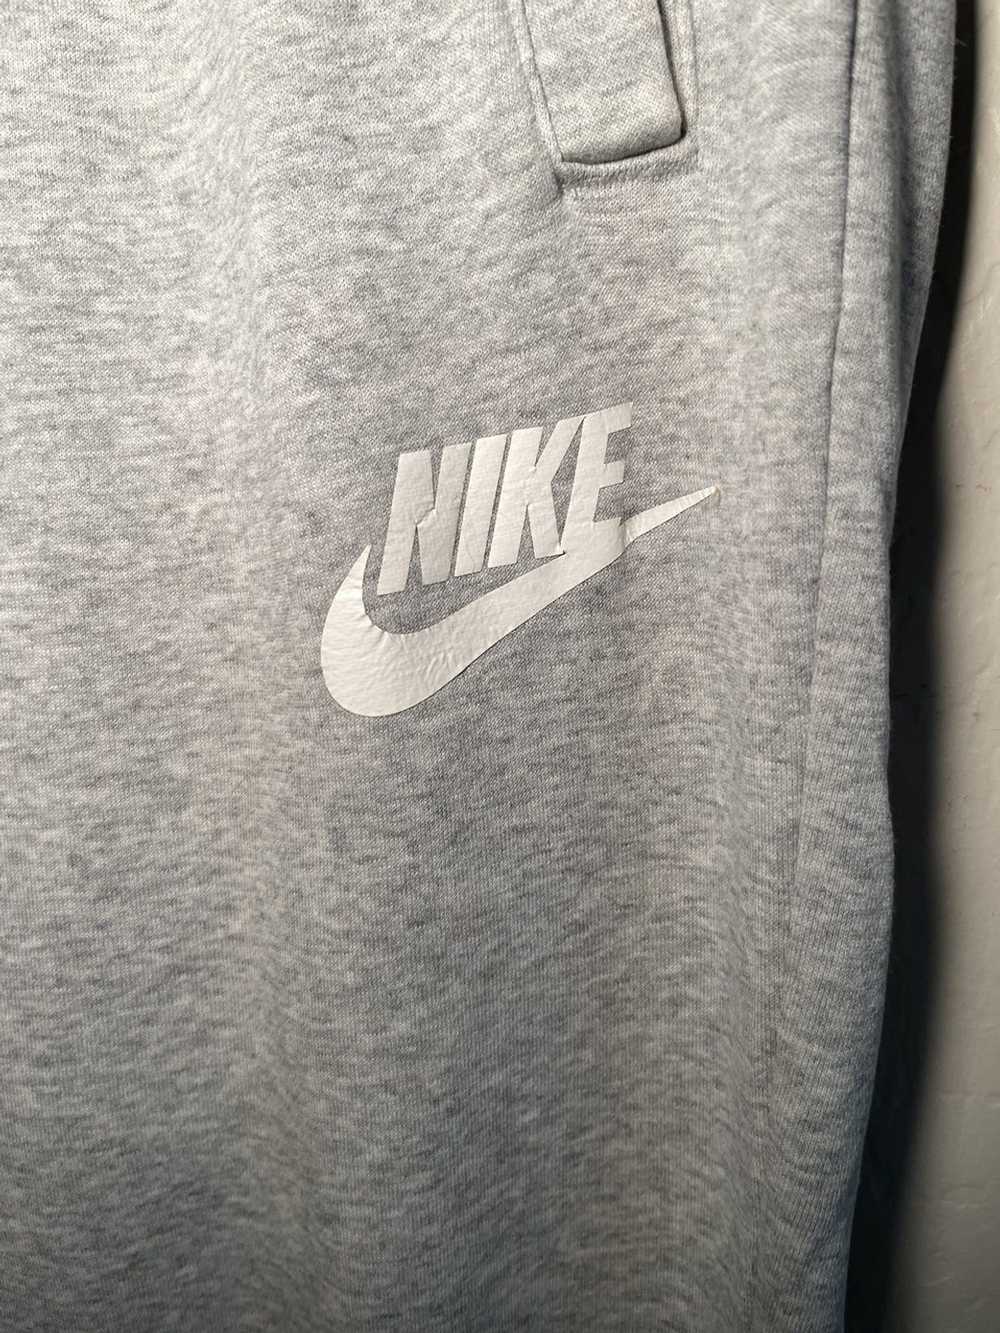 Nike Nike jogger sweats - image 2